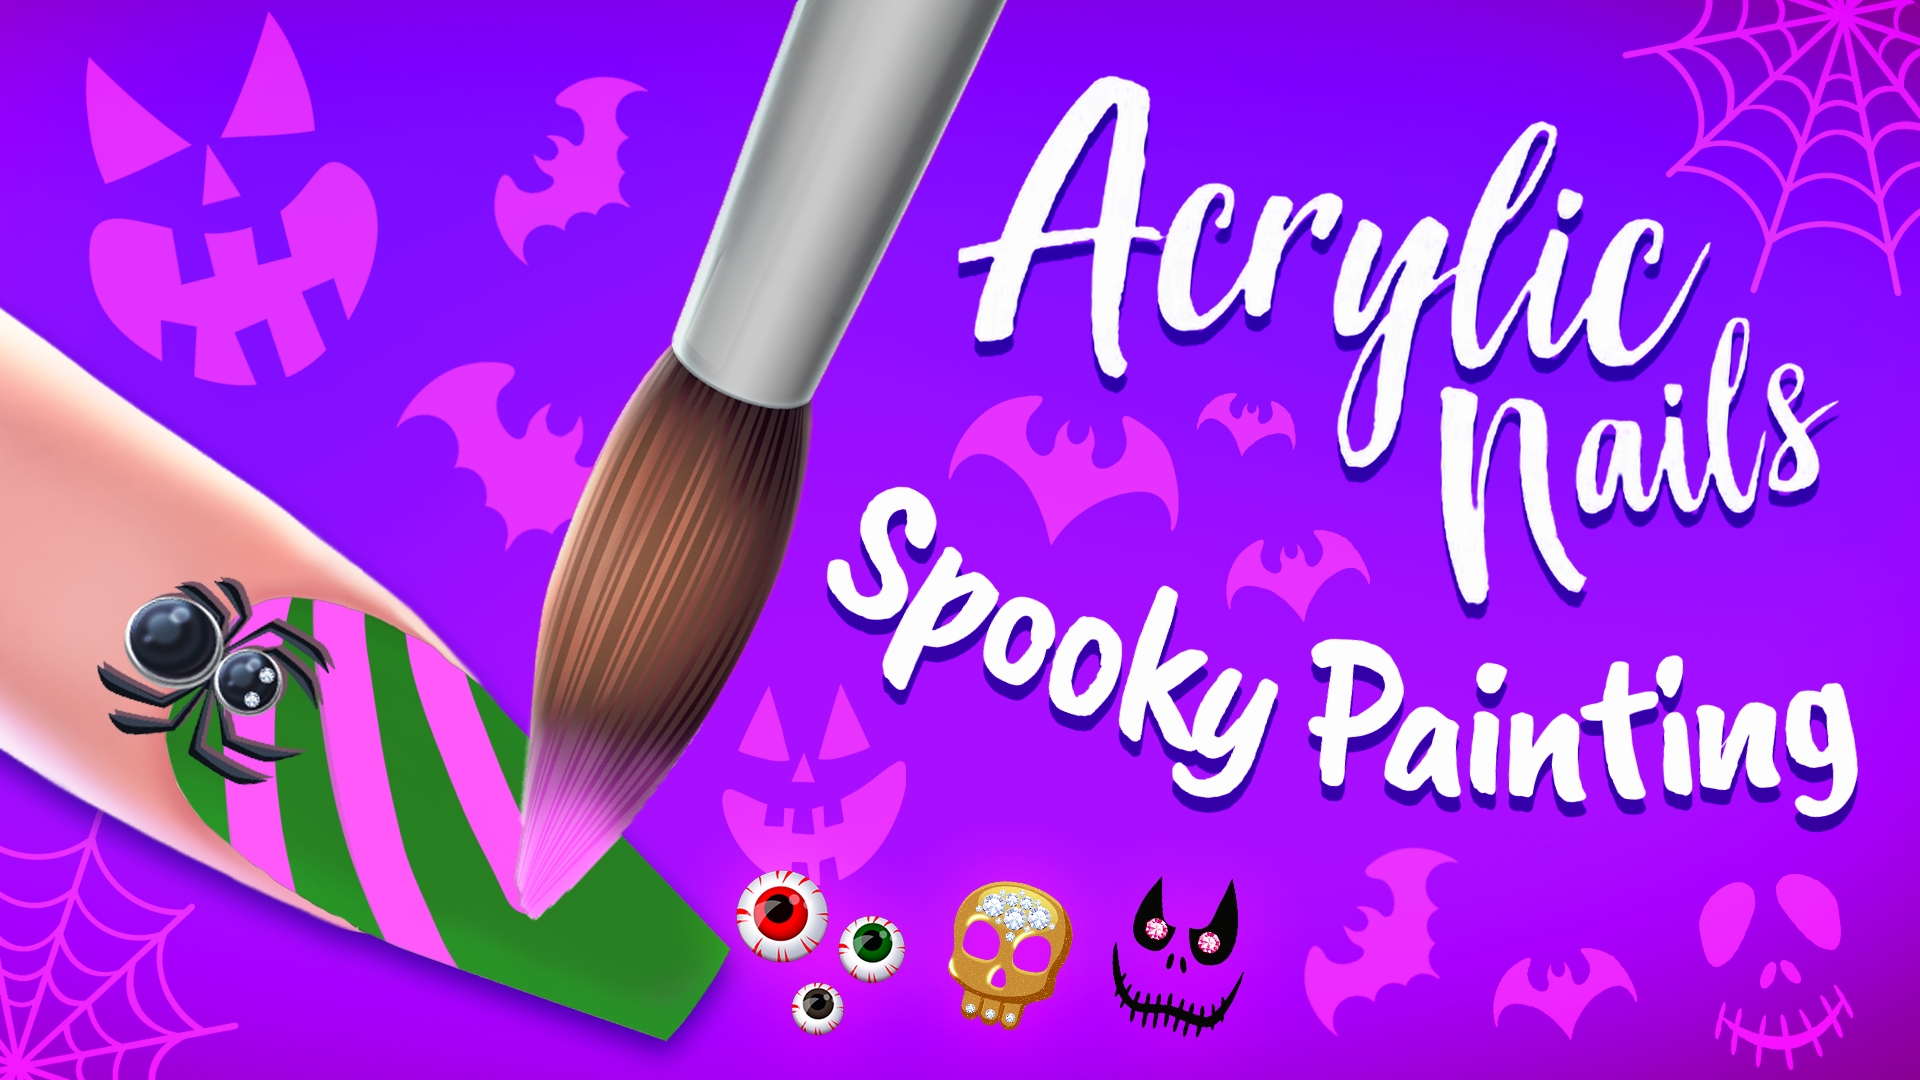 Acrylic Nails!: Spooky Painting